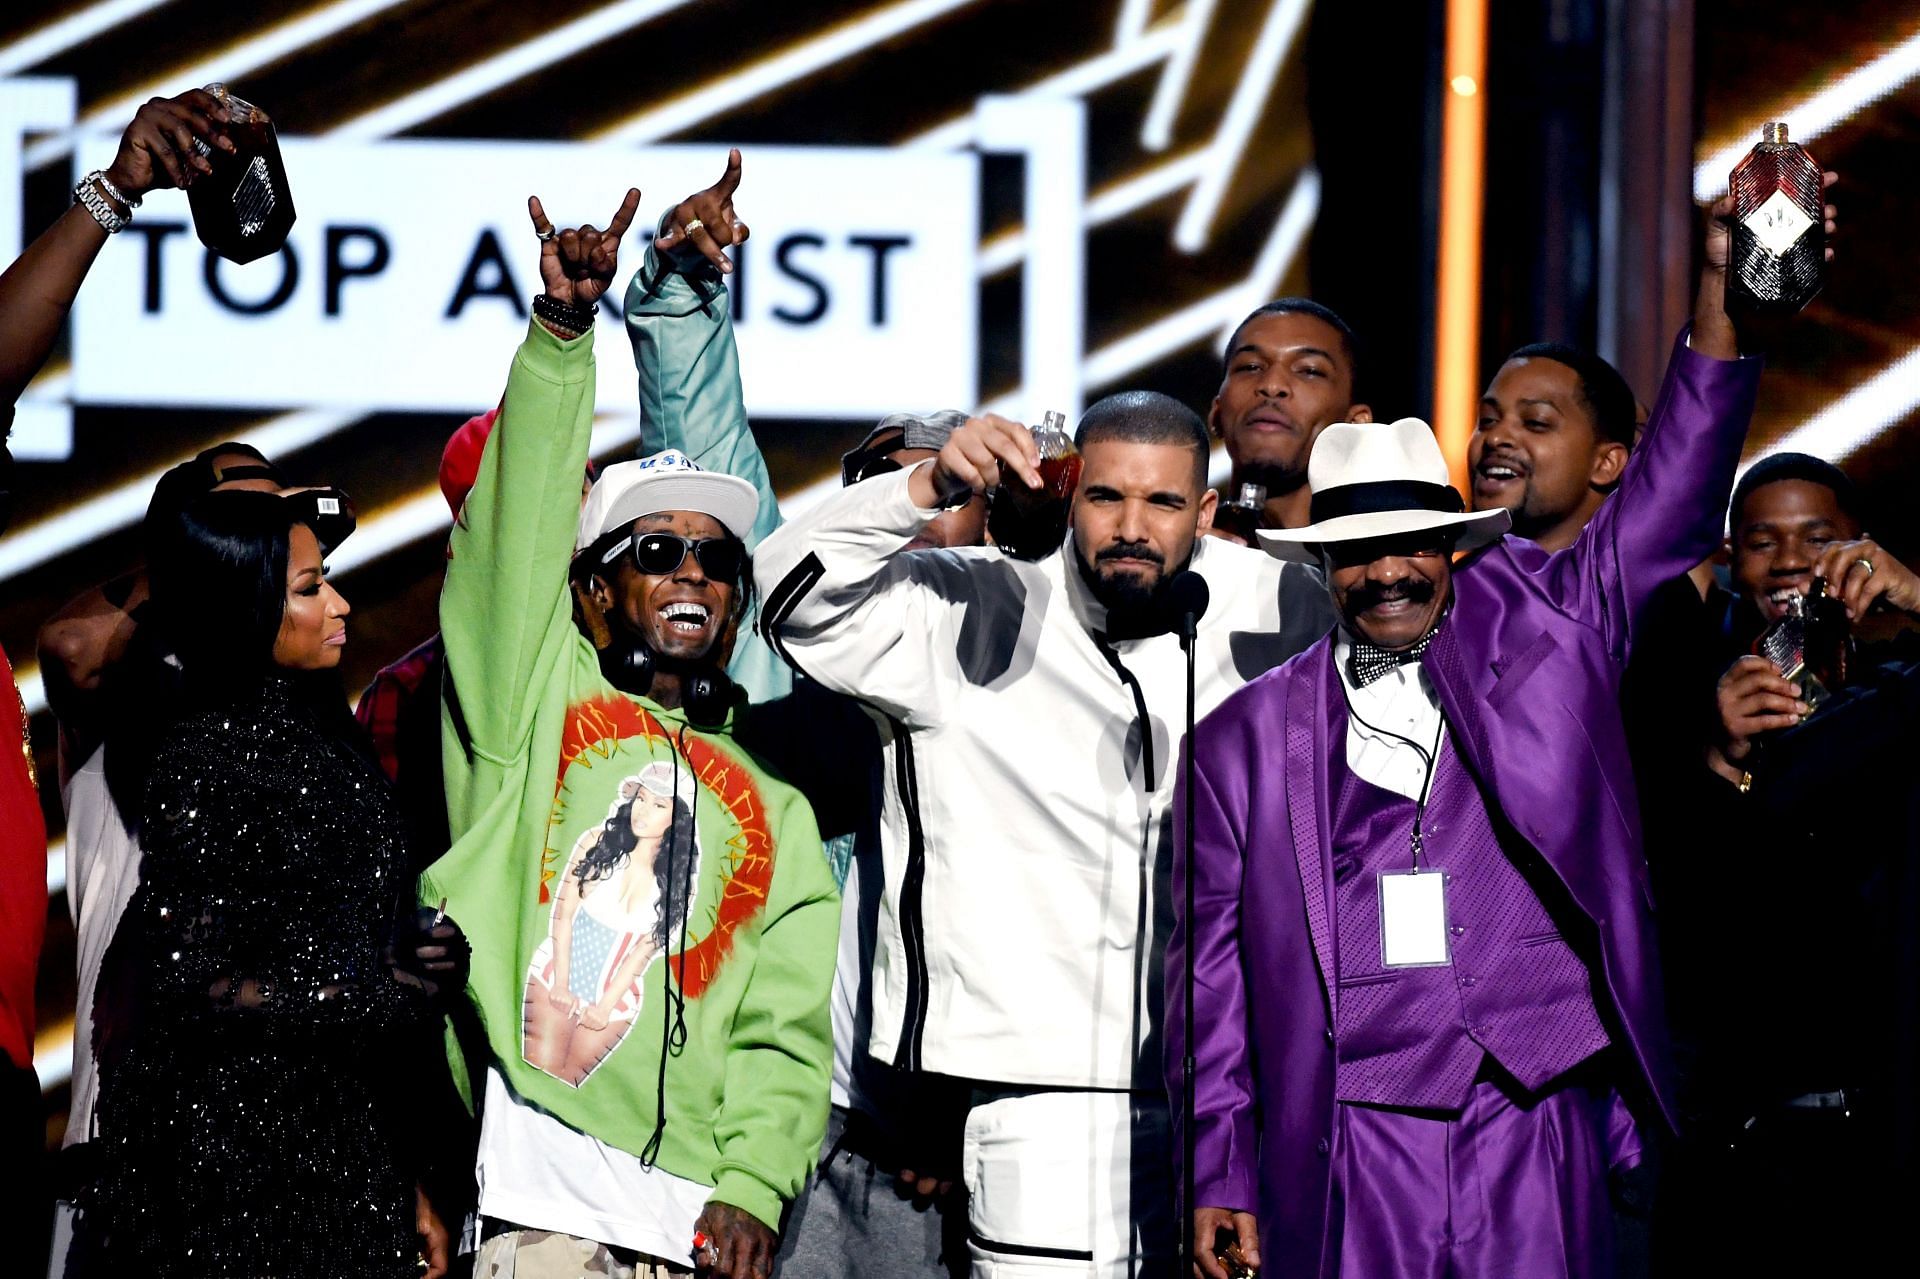 Drake, Lil Wayne and Nicki Minaj at the 2017 Billboard Music Awards (Image via Getty Images)